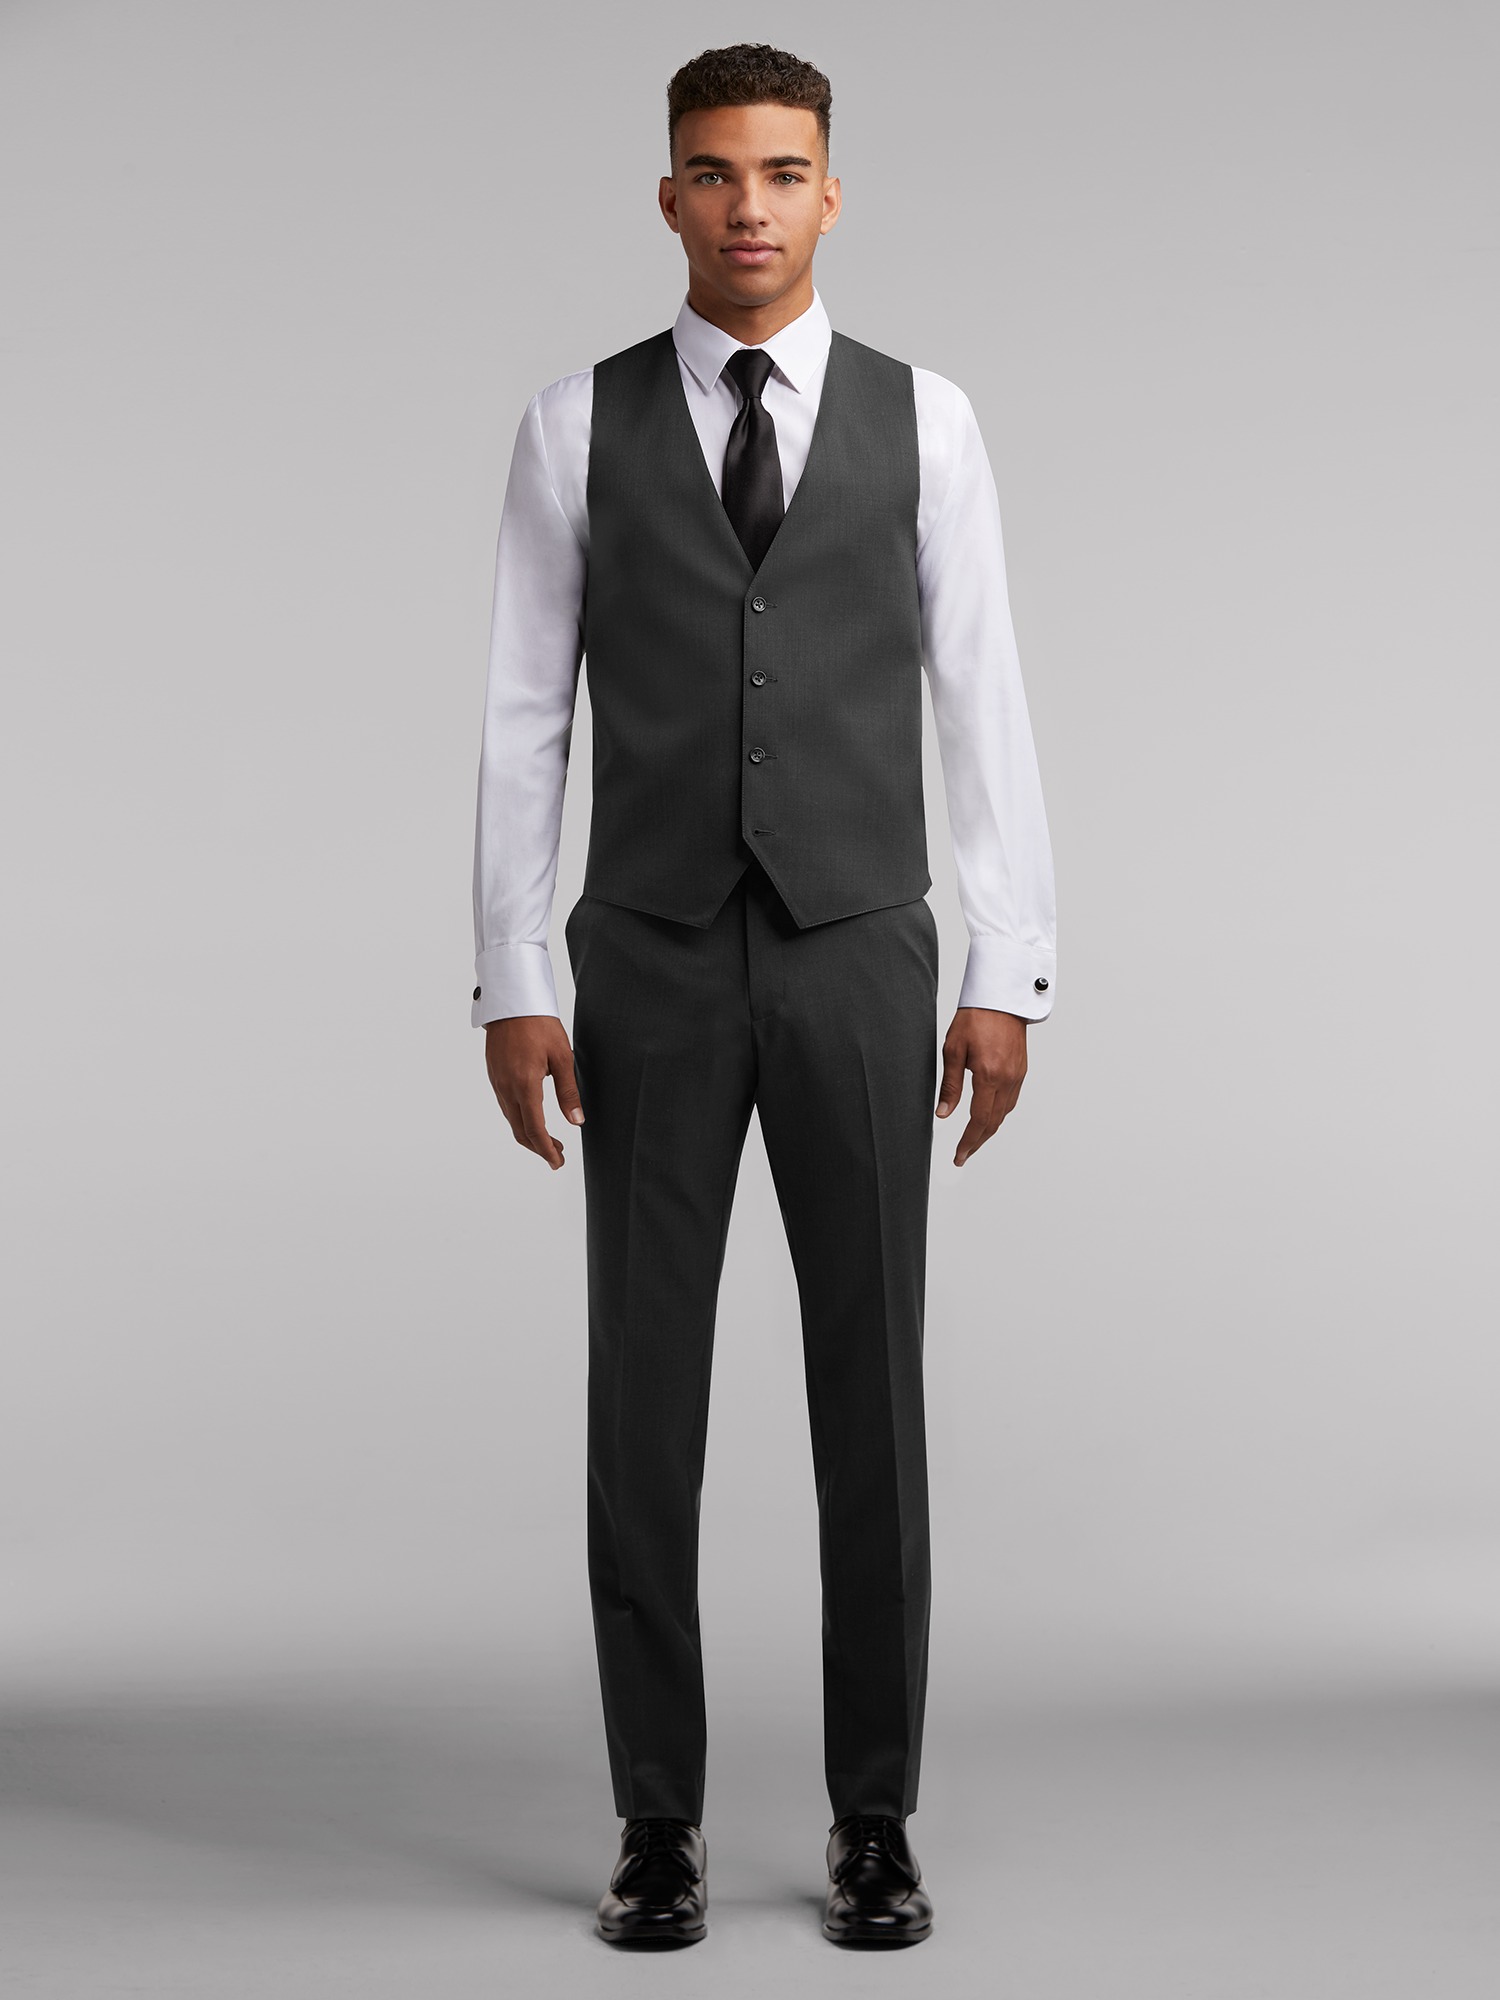  Calvin Klein Boys' Big 3-Piece Formal Suit Set, Silver